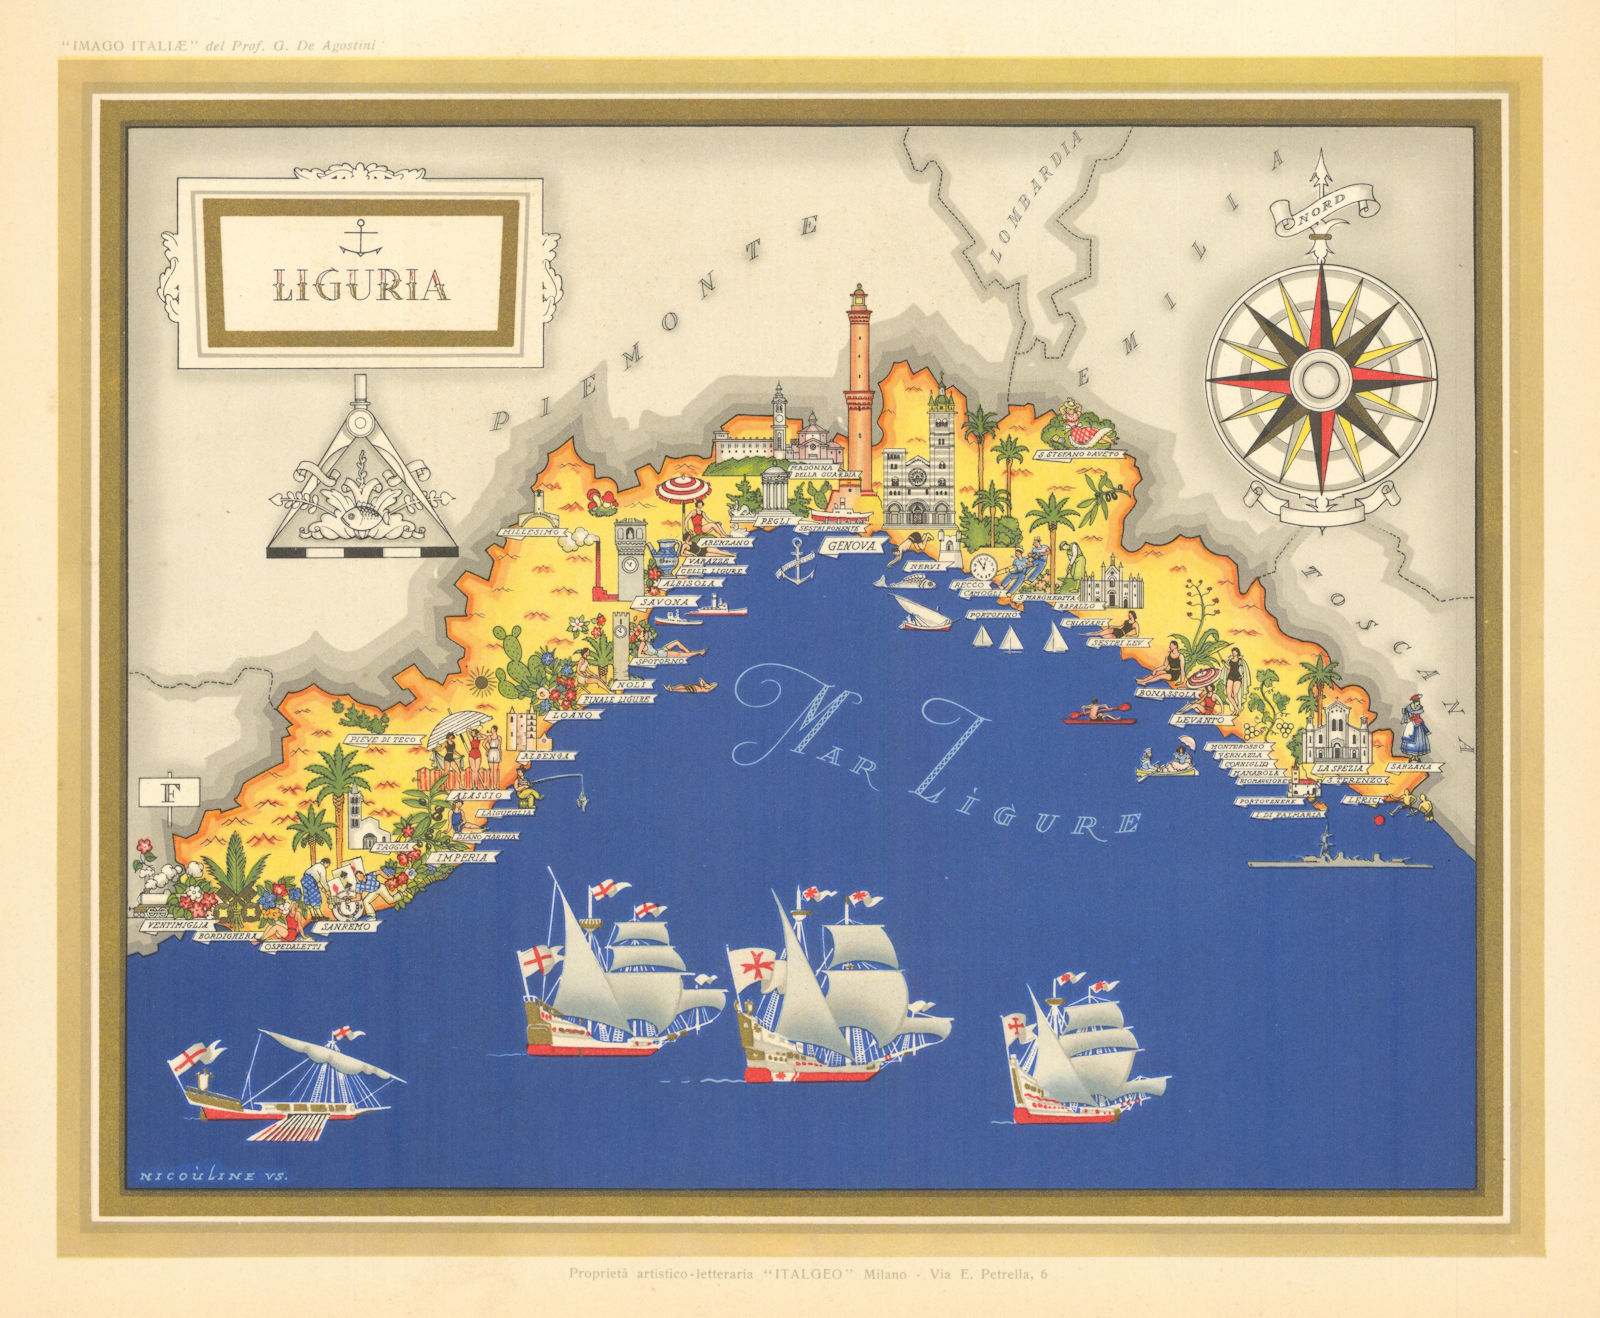 Liguria pictorial map by Vsevolode Nicouline. Italgeo/Agostini c1950 old